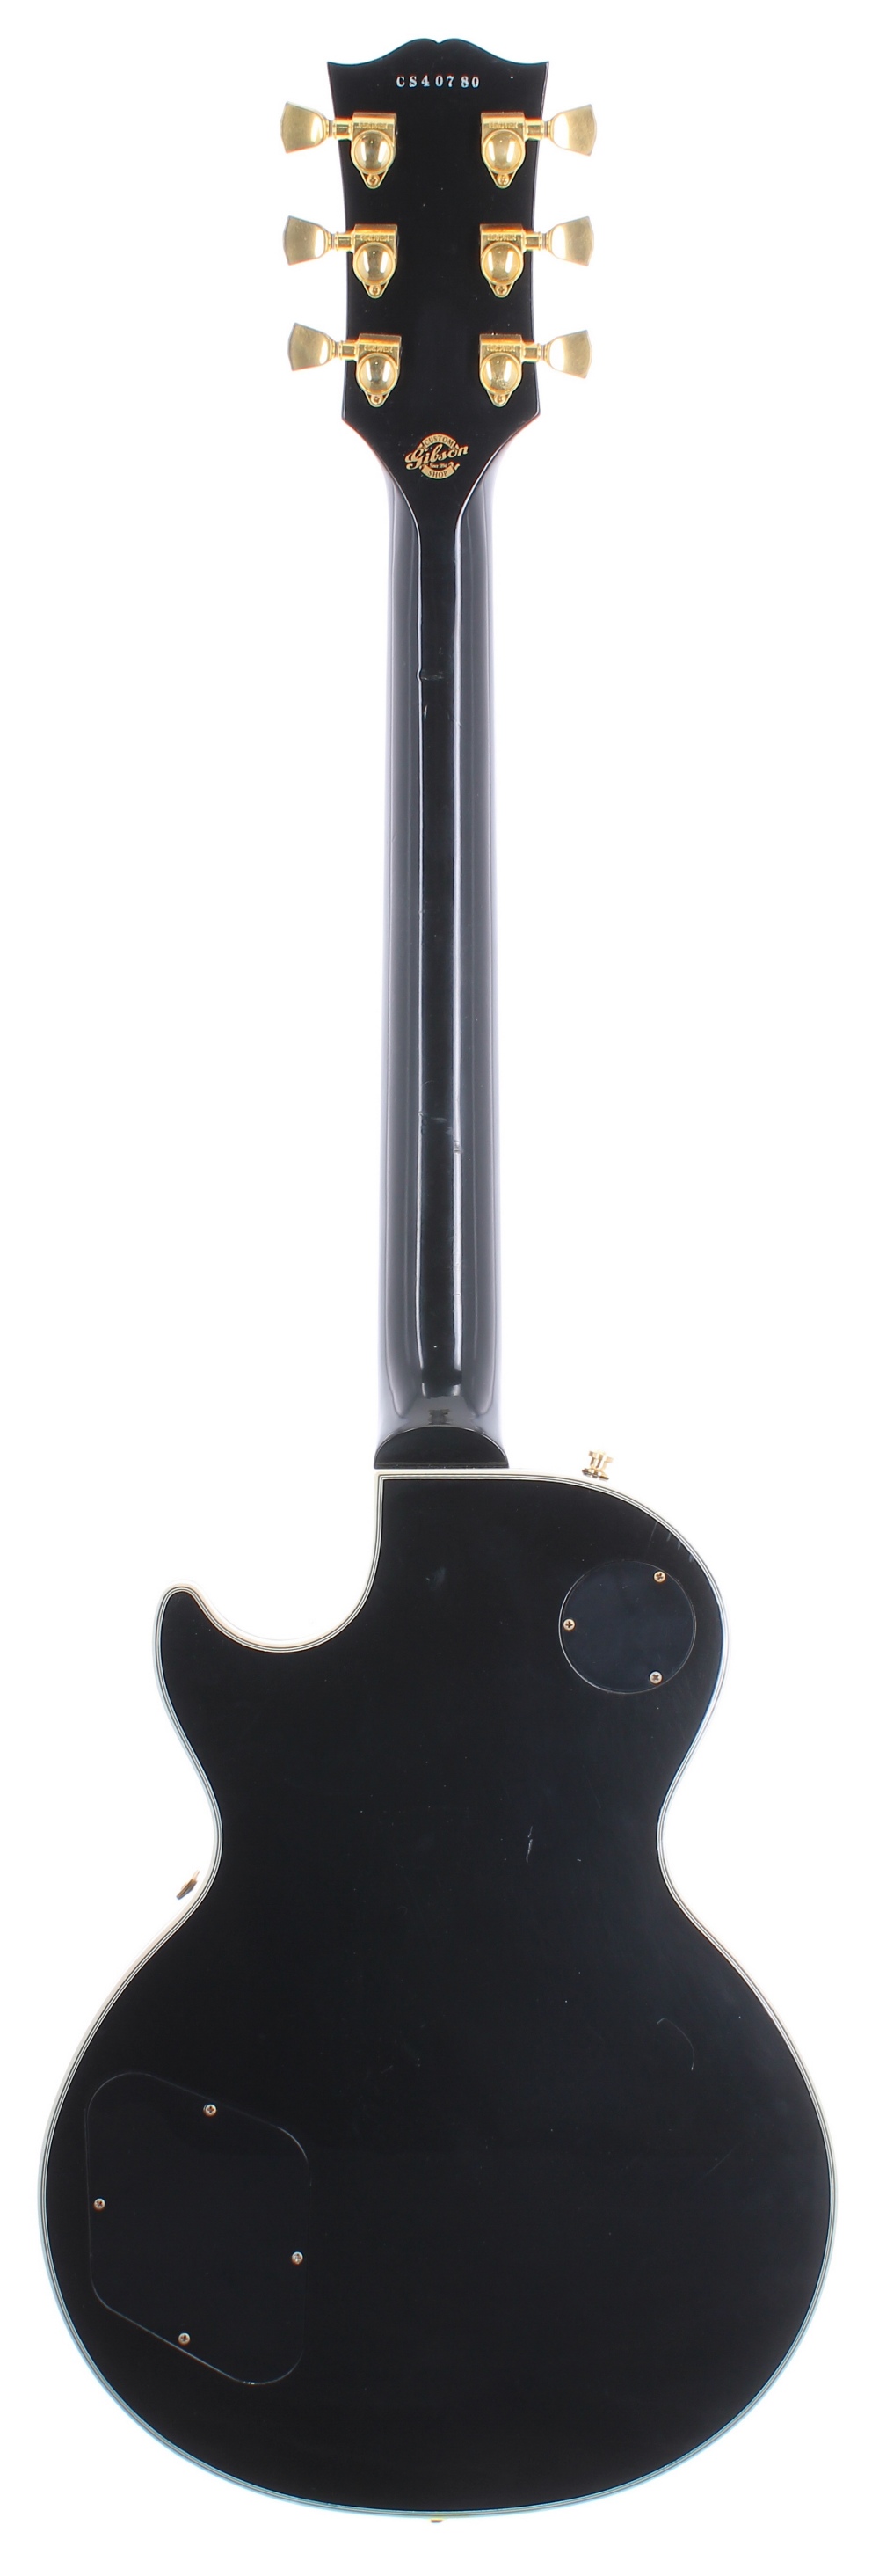 2004 Gibson Custom Shop Les Paul Custom Black Beauty electric guitar, made in USA, ser. no. CS4xxx0; - Image 2 of 2